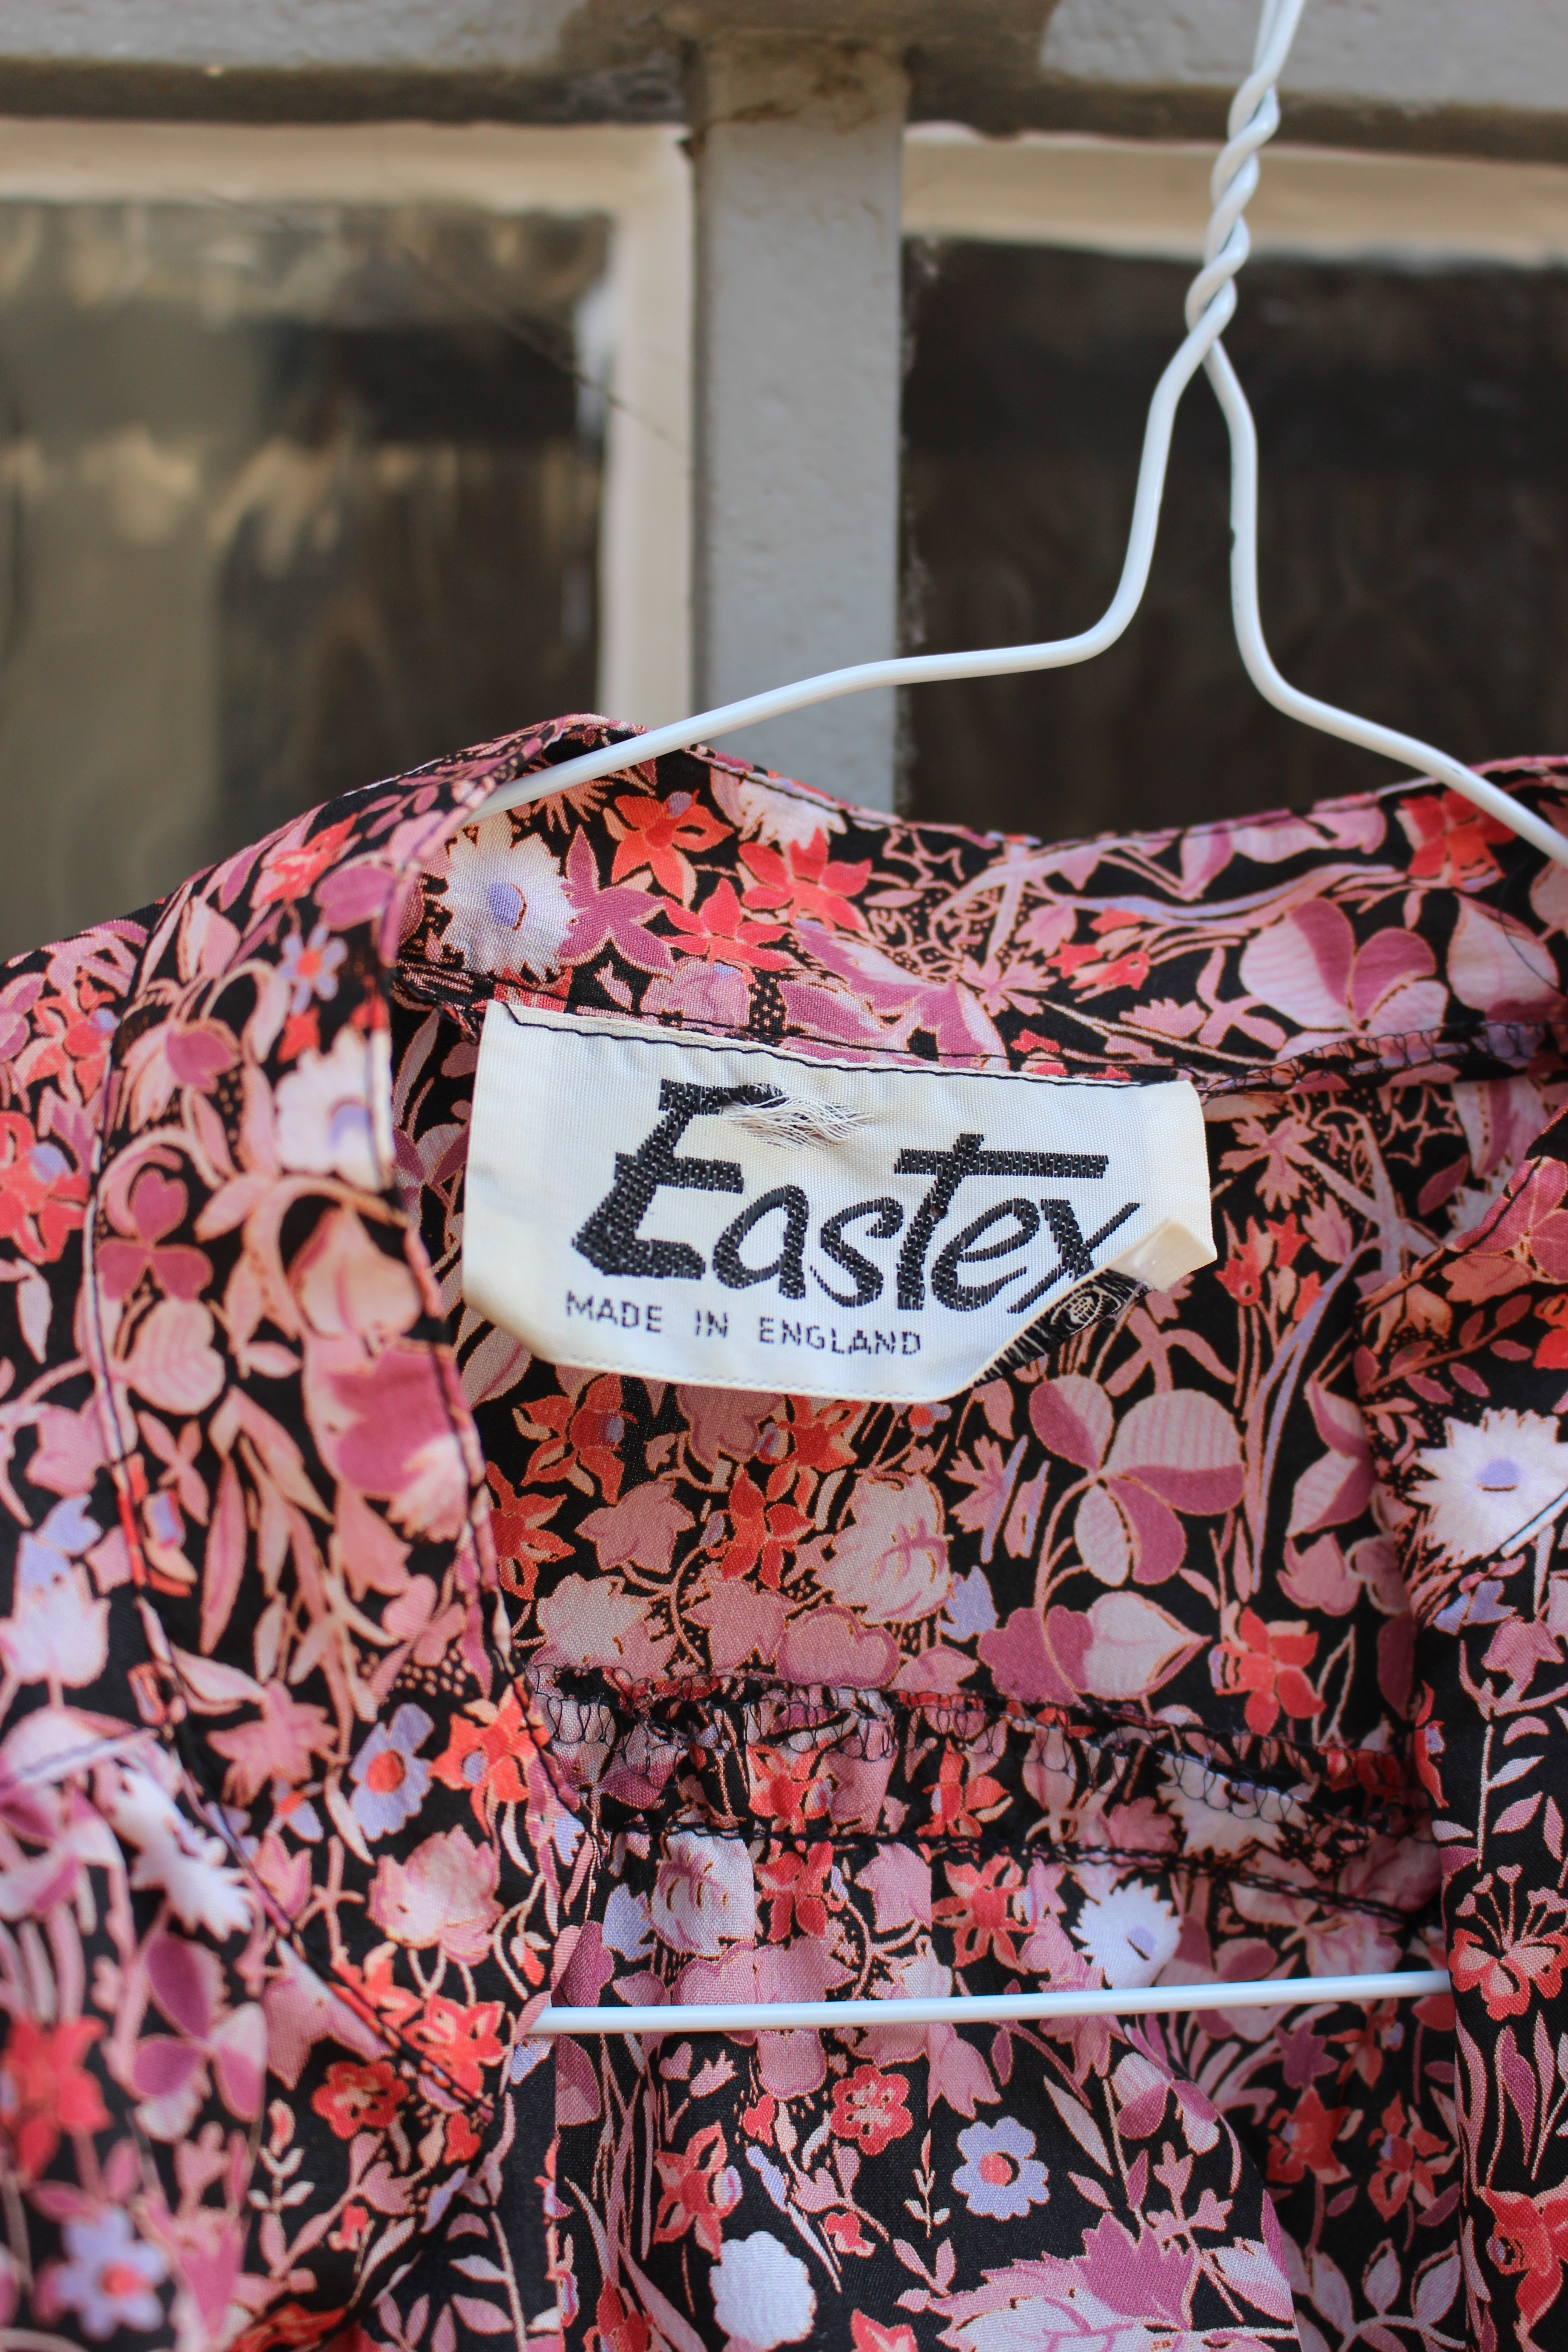 Eastex Liberty-print long shirt, showing label